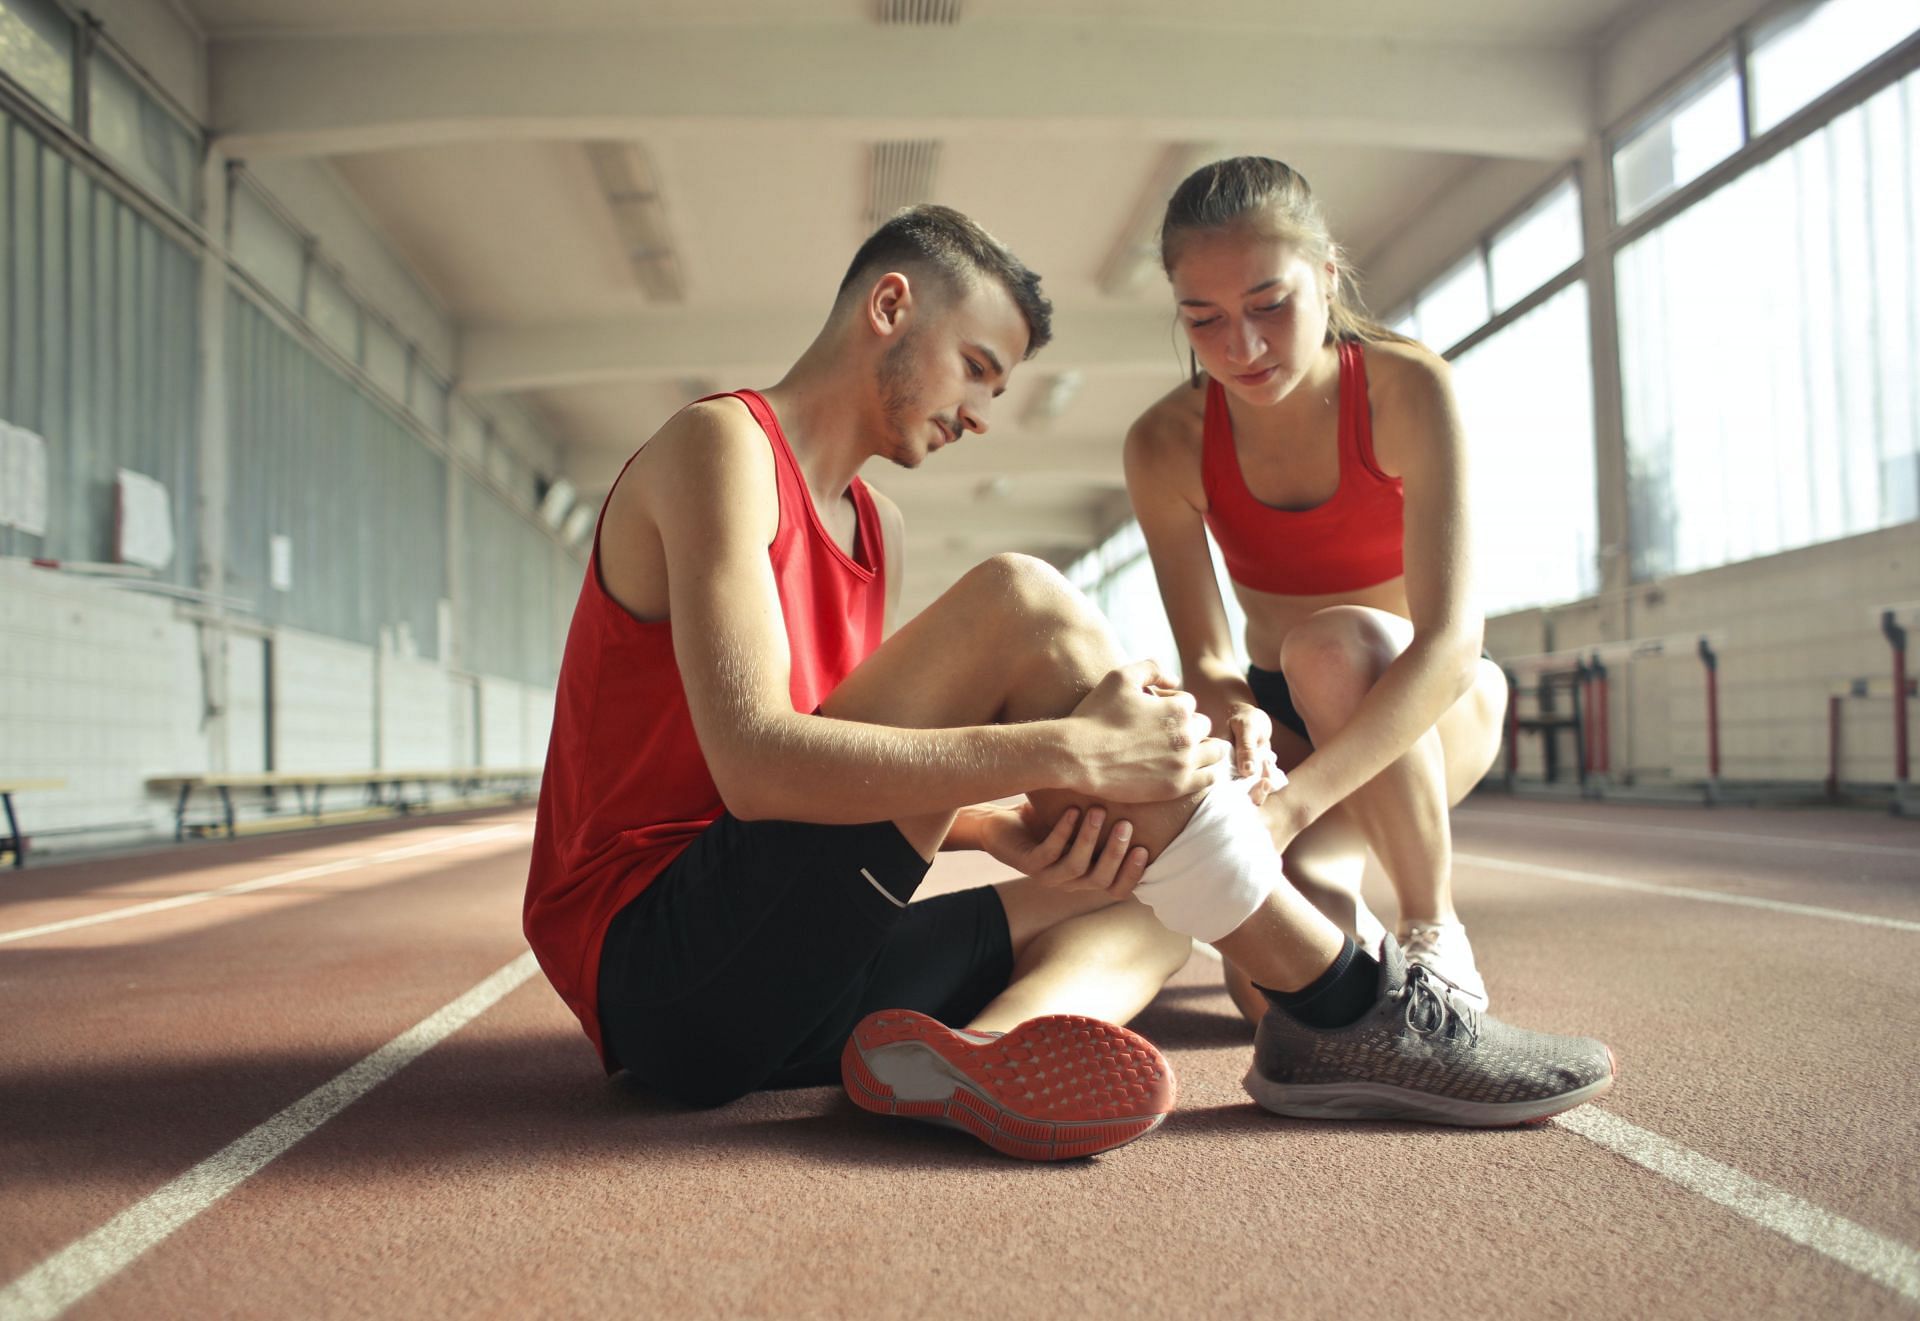 Flexibility training reduces the chances of injury (Image via pexels/Andrea Piacquadio)